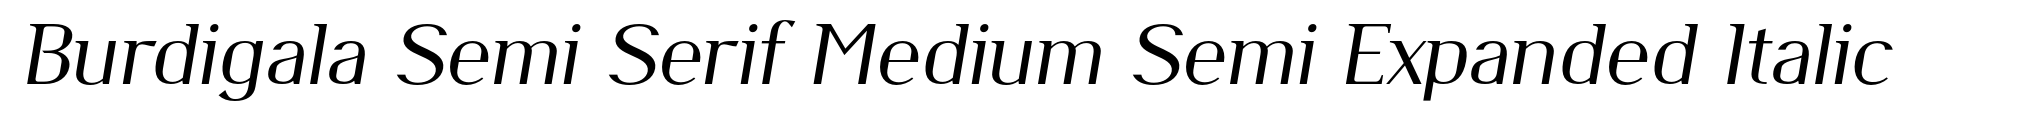 Burdigala Semi Serif Medium Semi Expanded Italic image